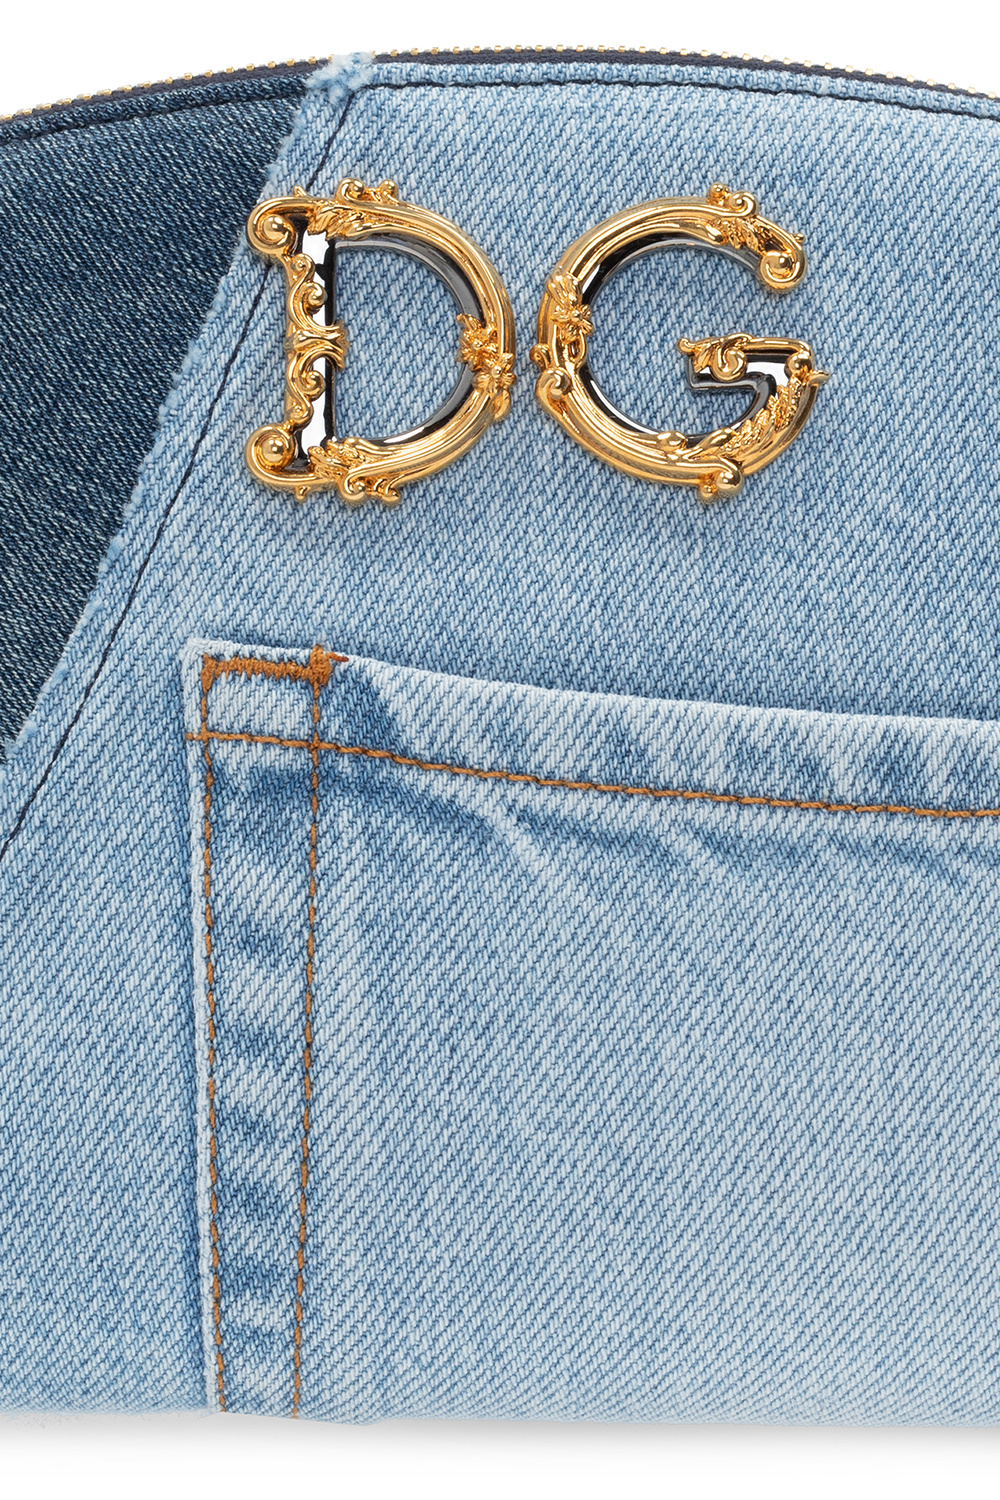 Dolce & Gabbana Dolce & Gabbana logo-plaque iPhone X case